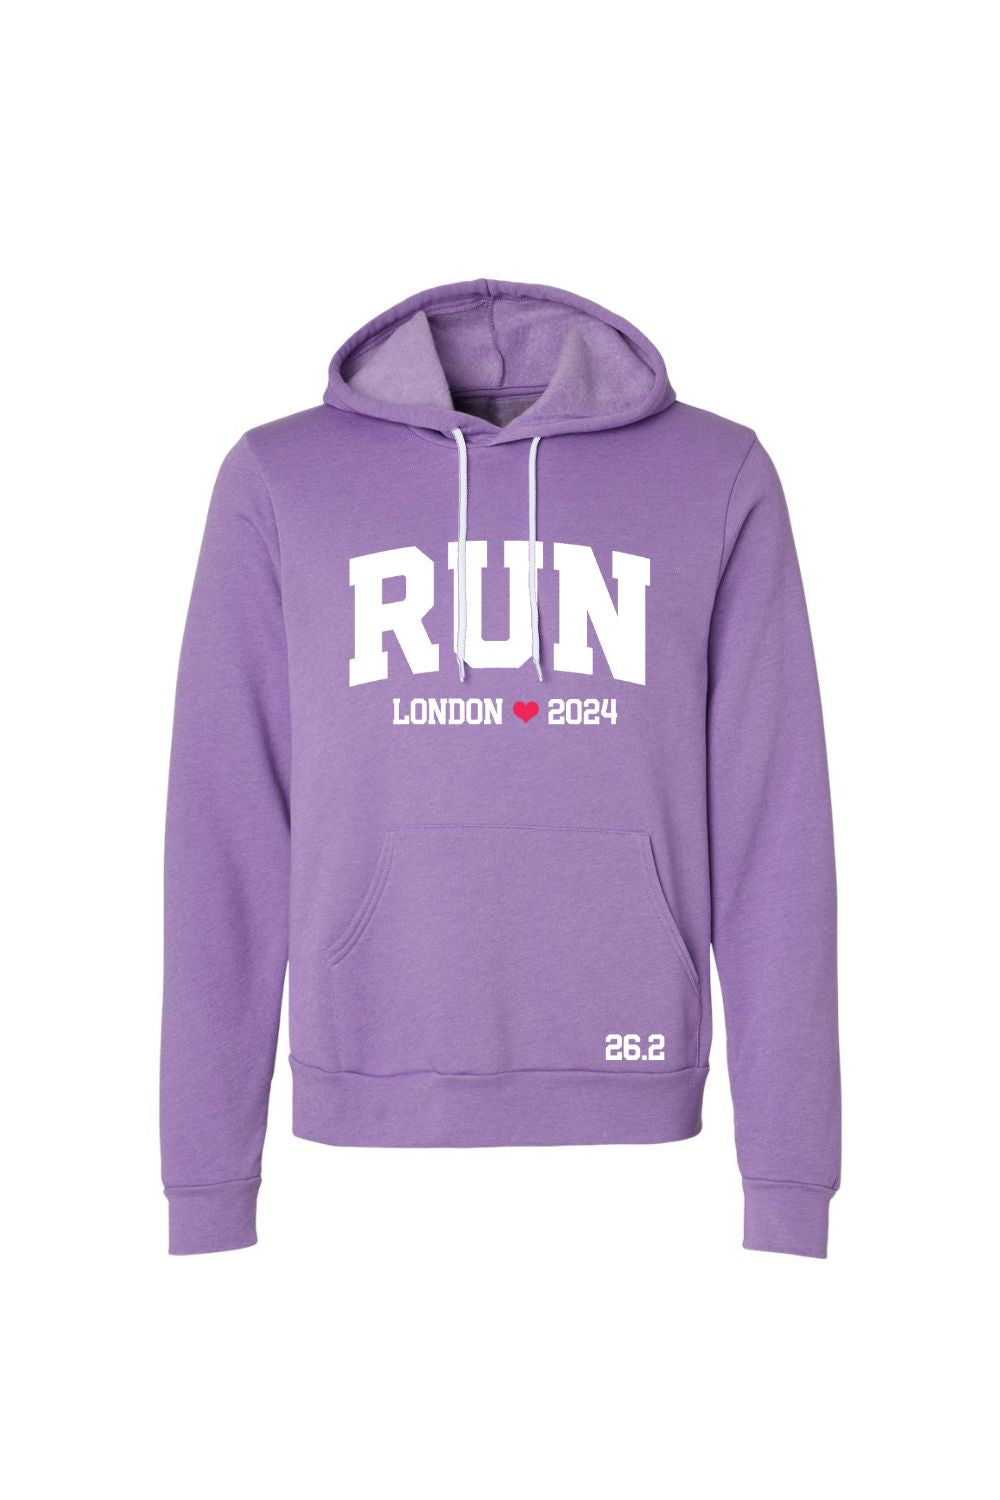 RUN London 2024 Marathon Hoodie